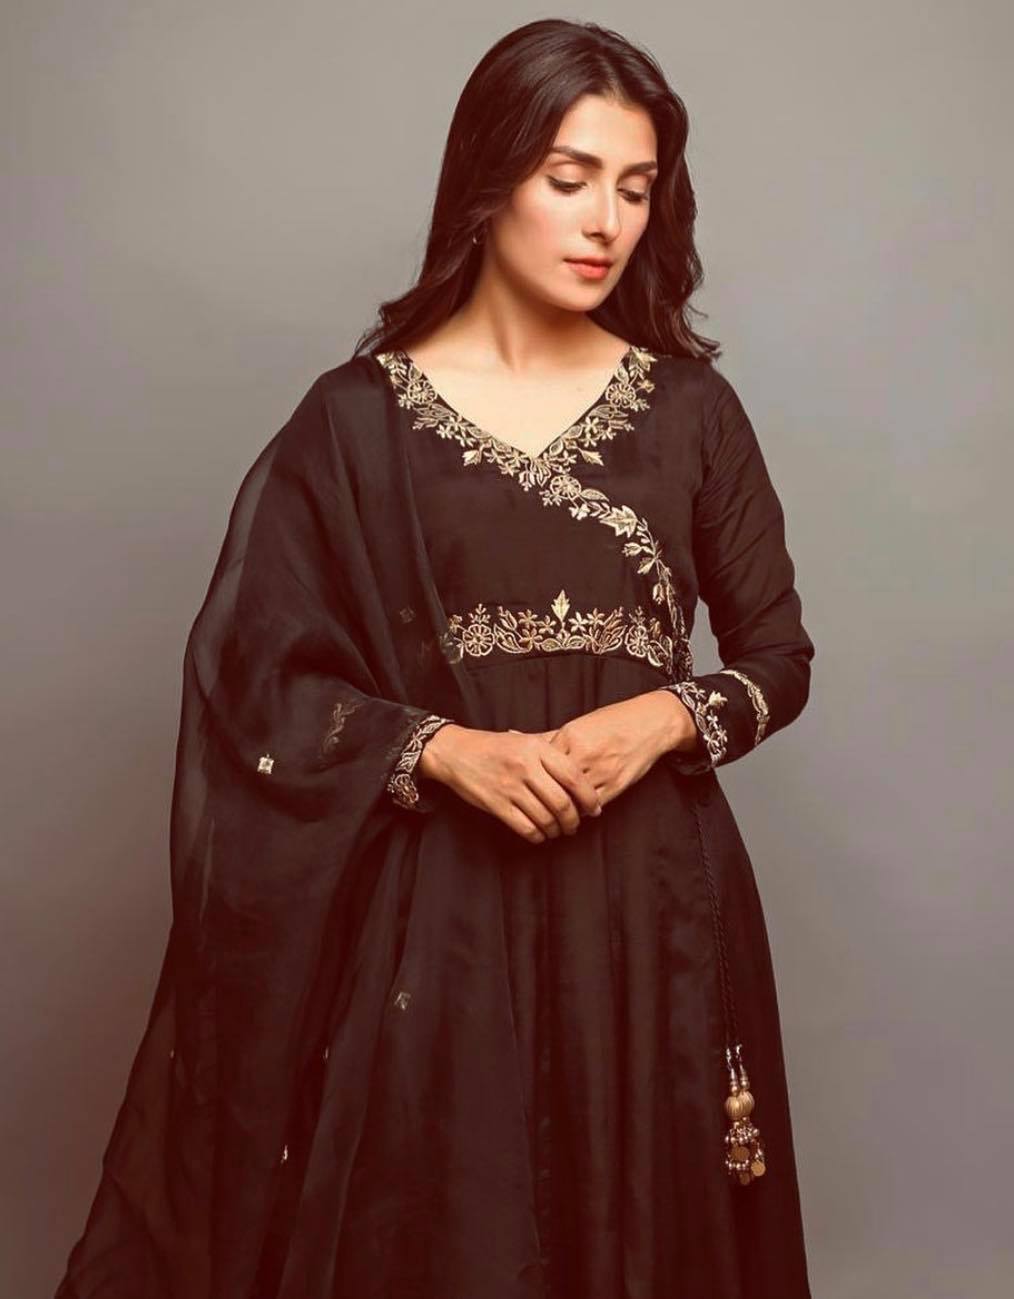 Top Pakistani Actresses In Beautiful Black Dresses